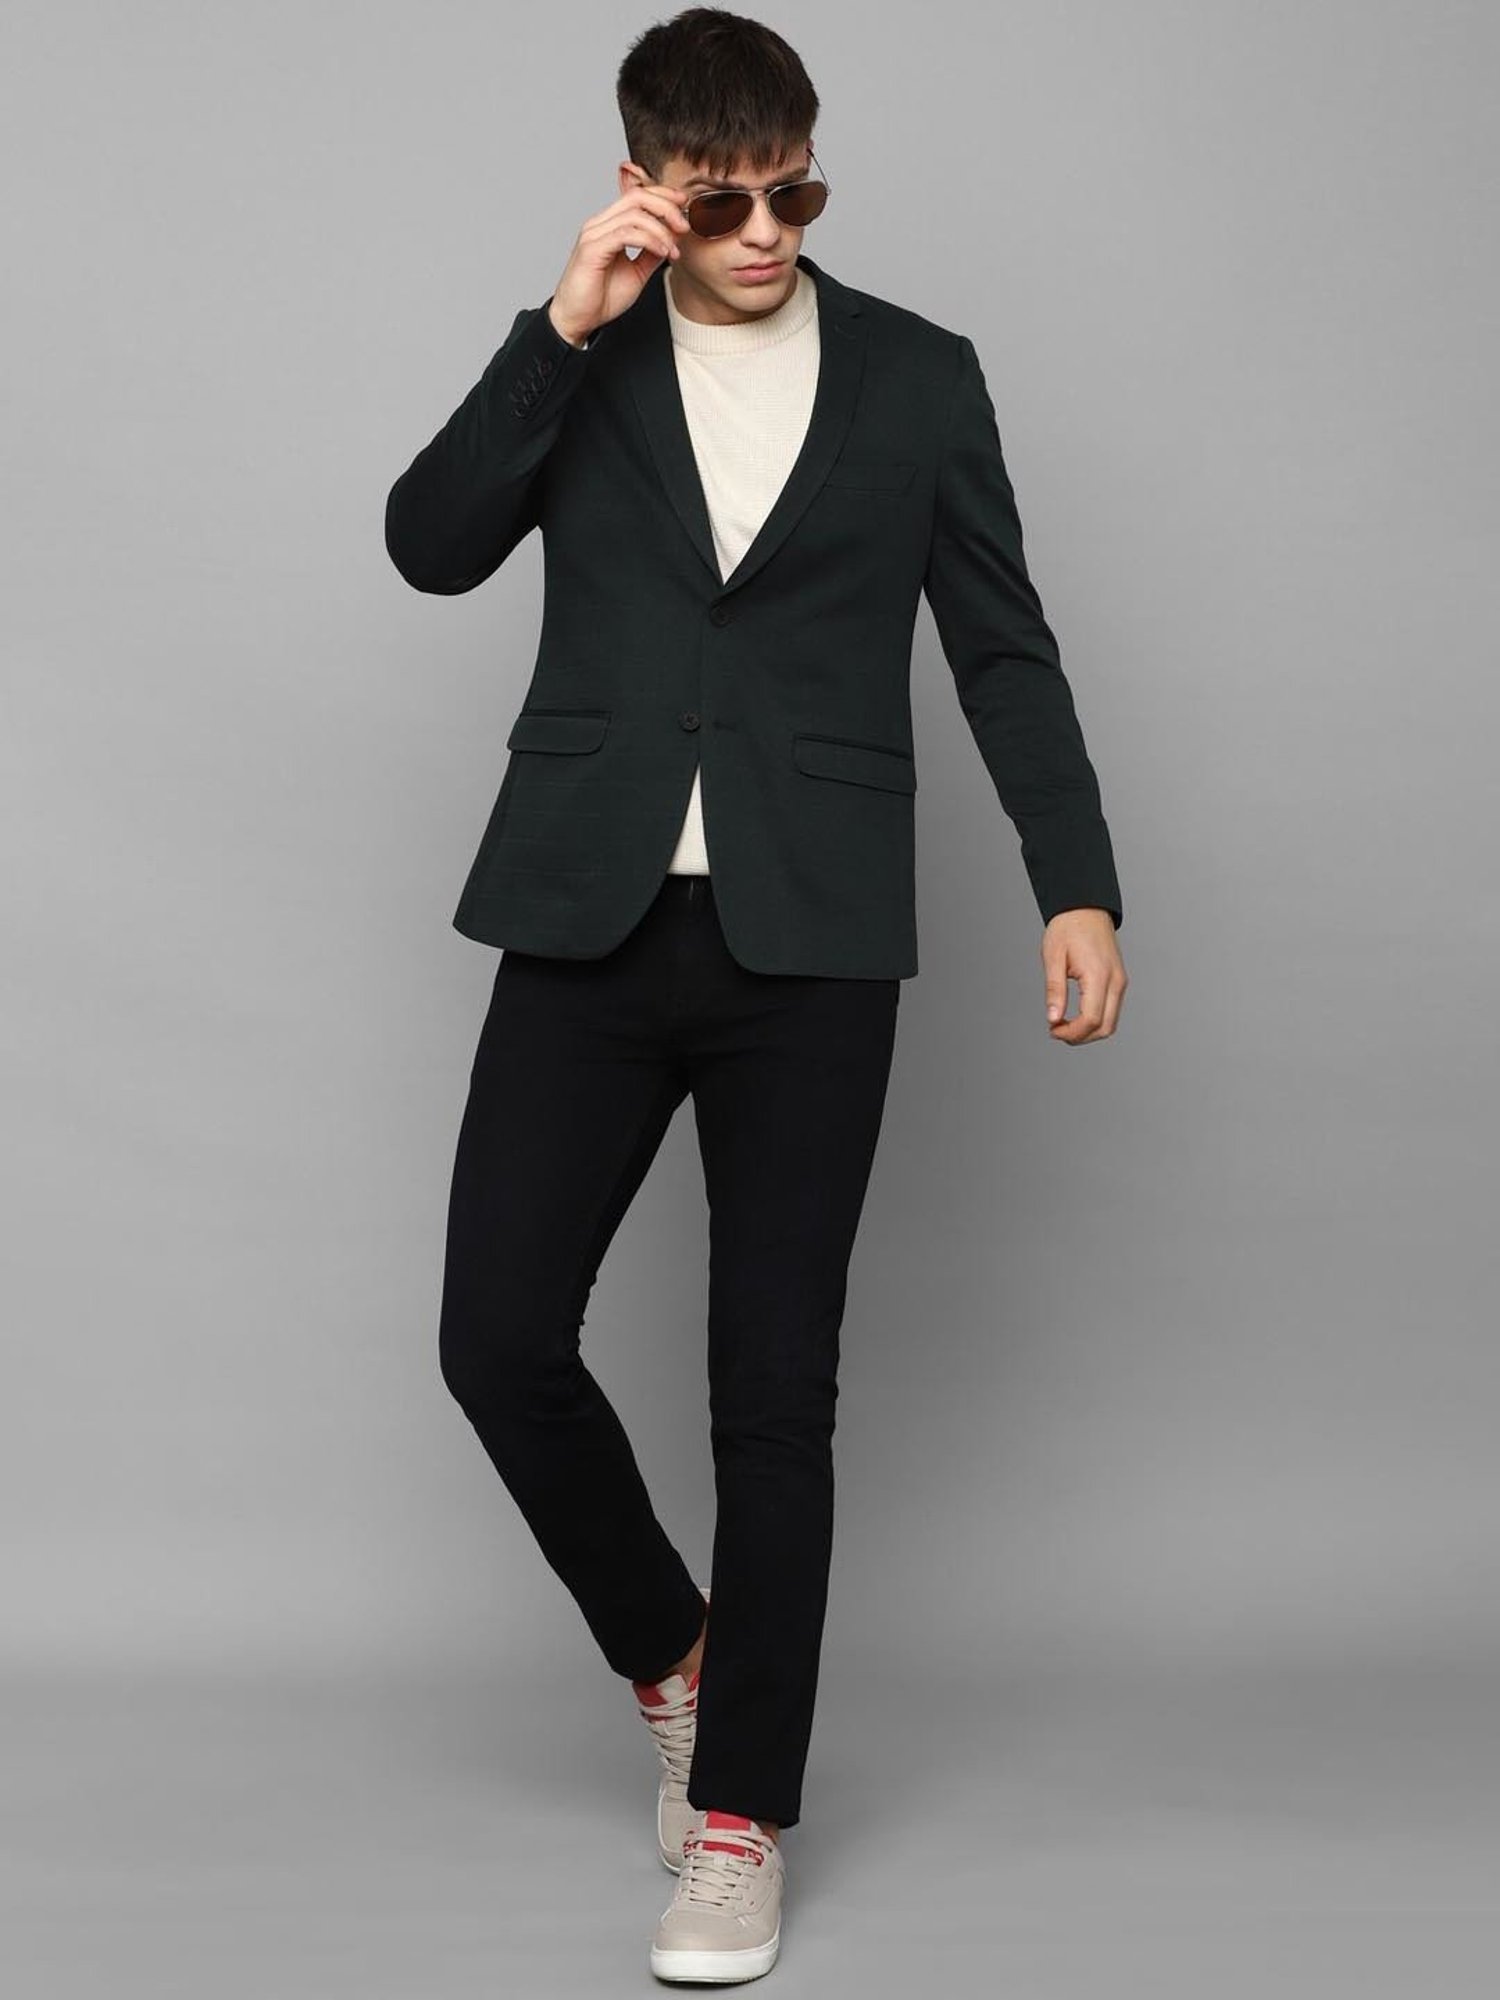 Women Formal Pant Suit Office Korean Lady Blazer Business Trousers Suits  Work | eBay